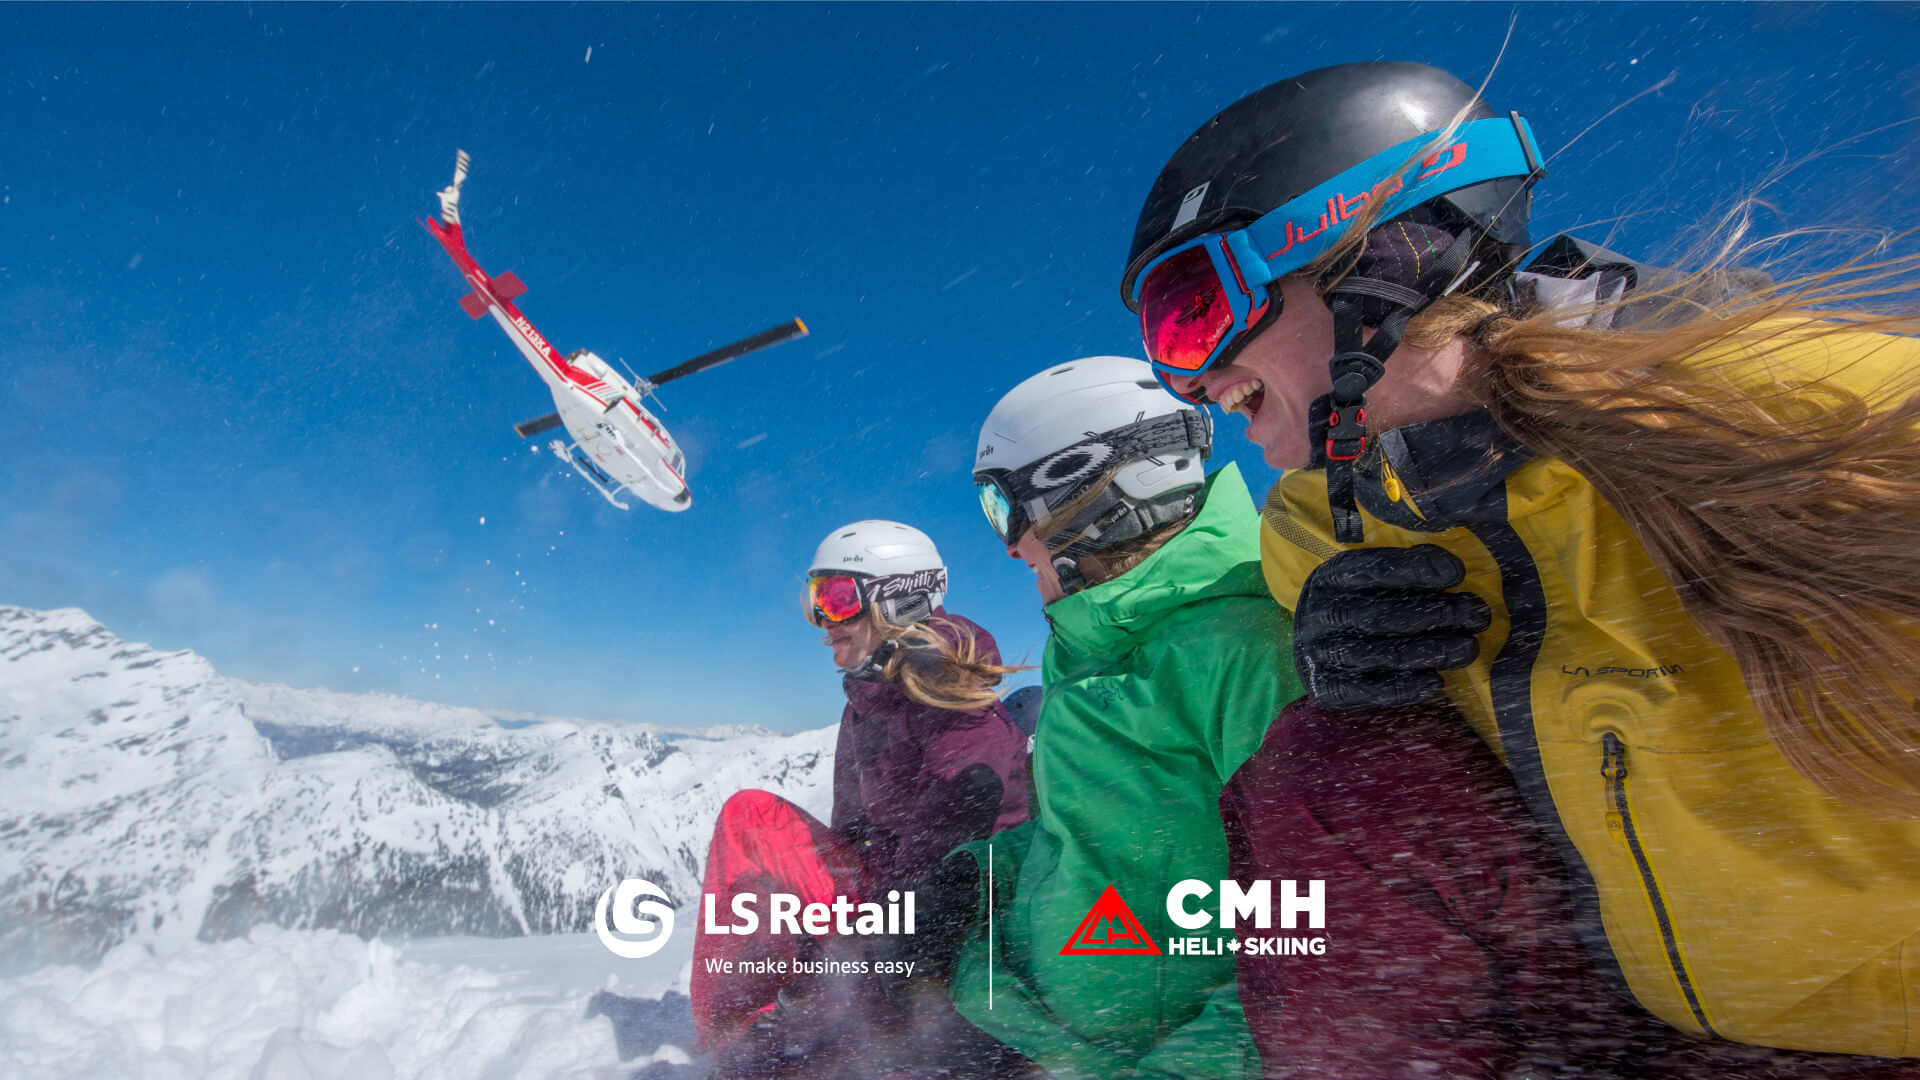 CMH Heli-skiing PR_1